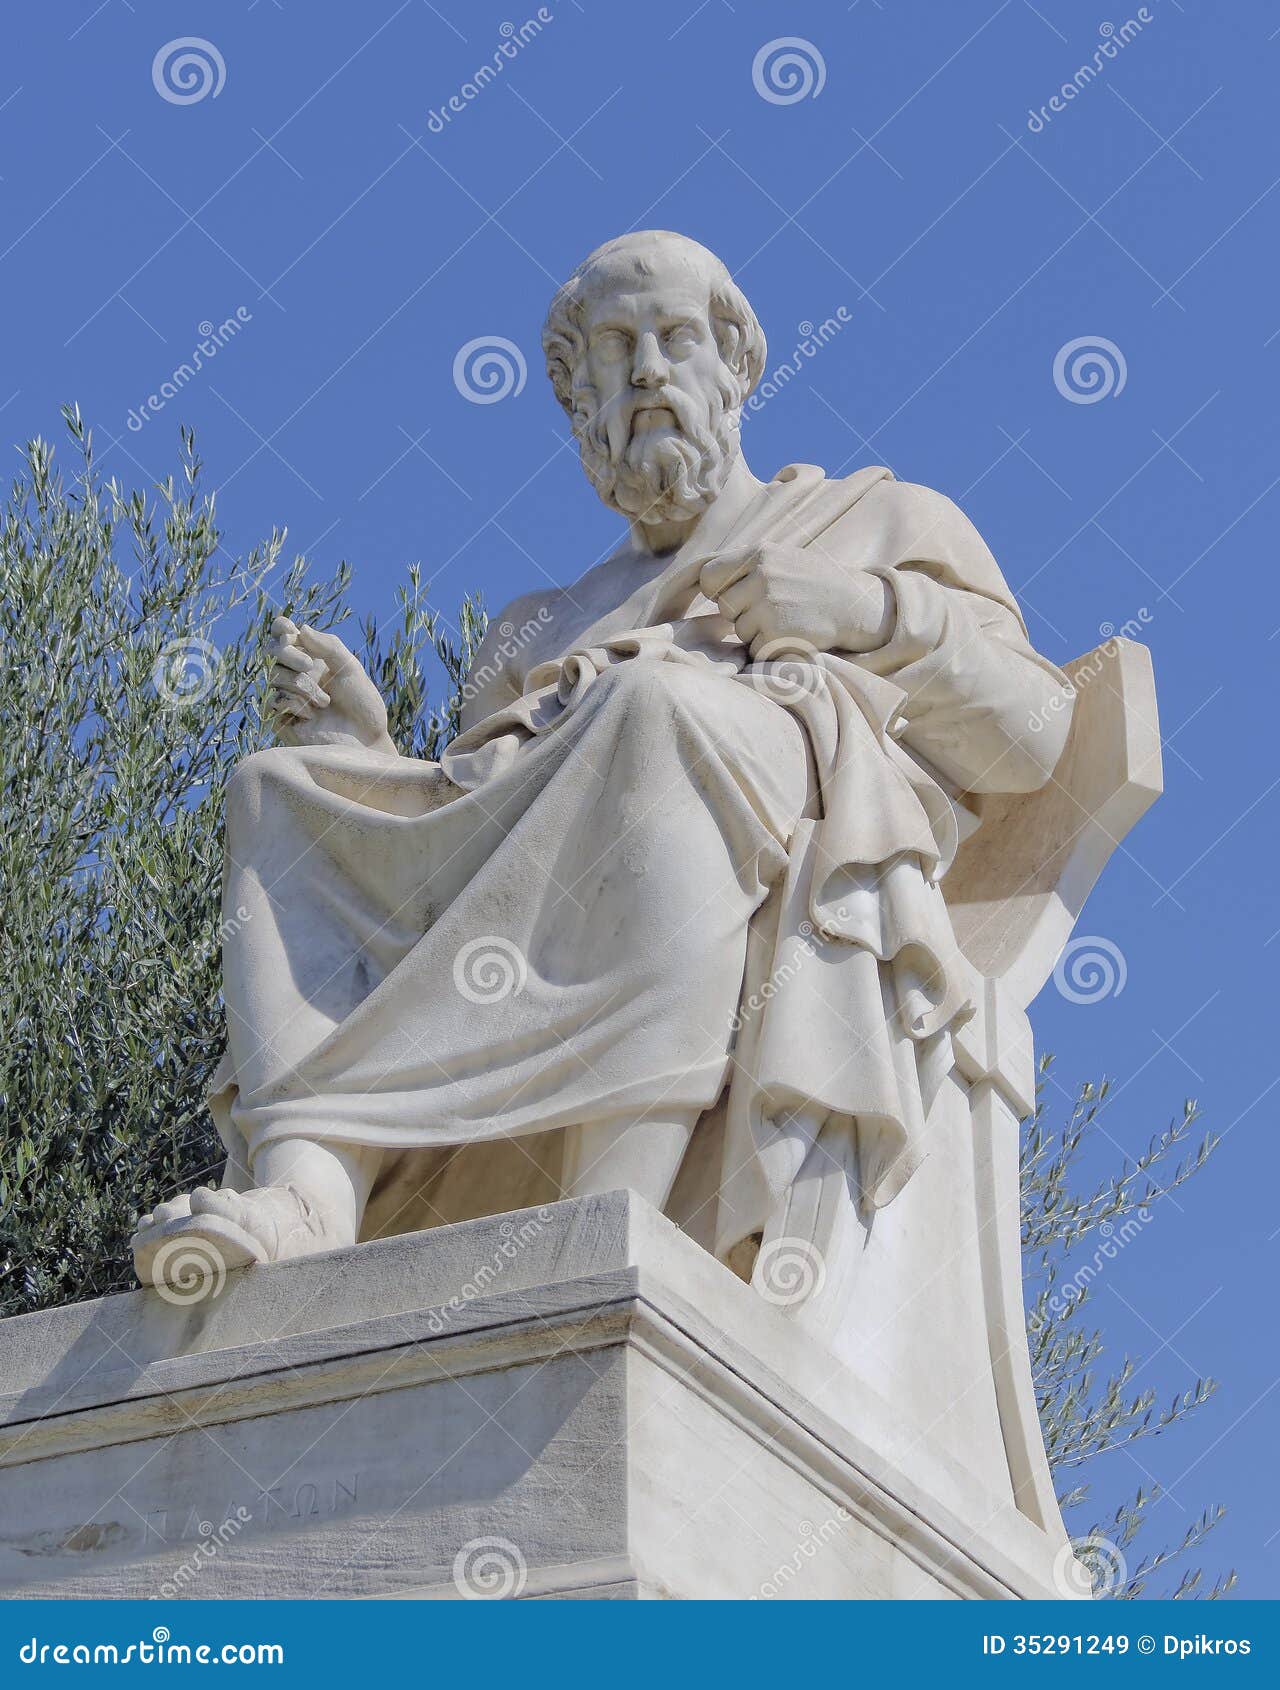 plato the philosopher statue